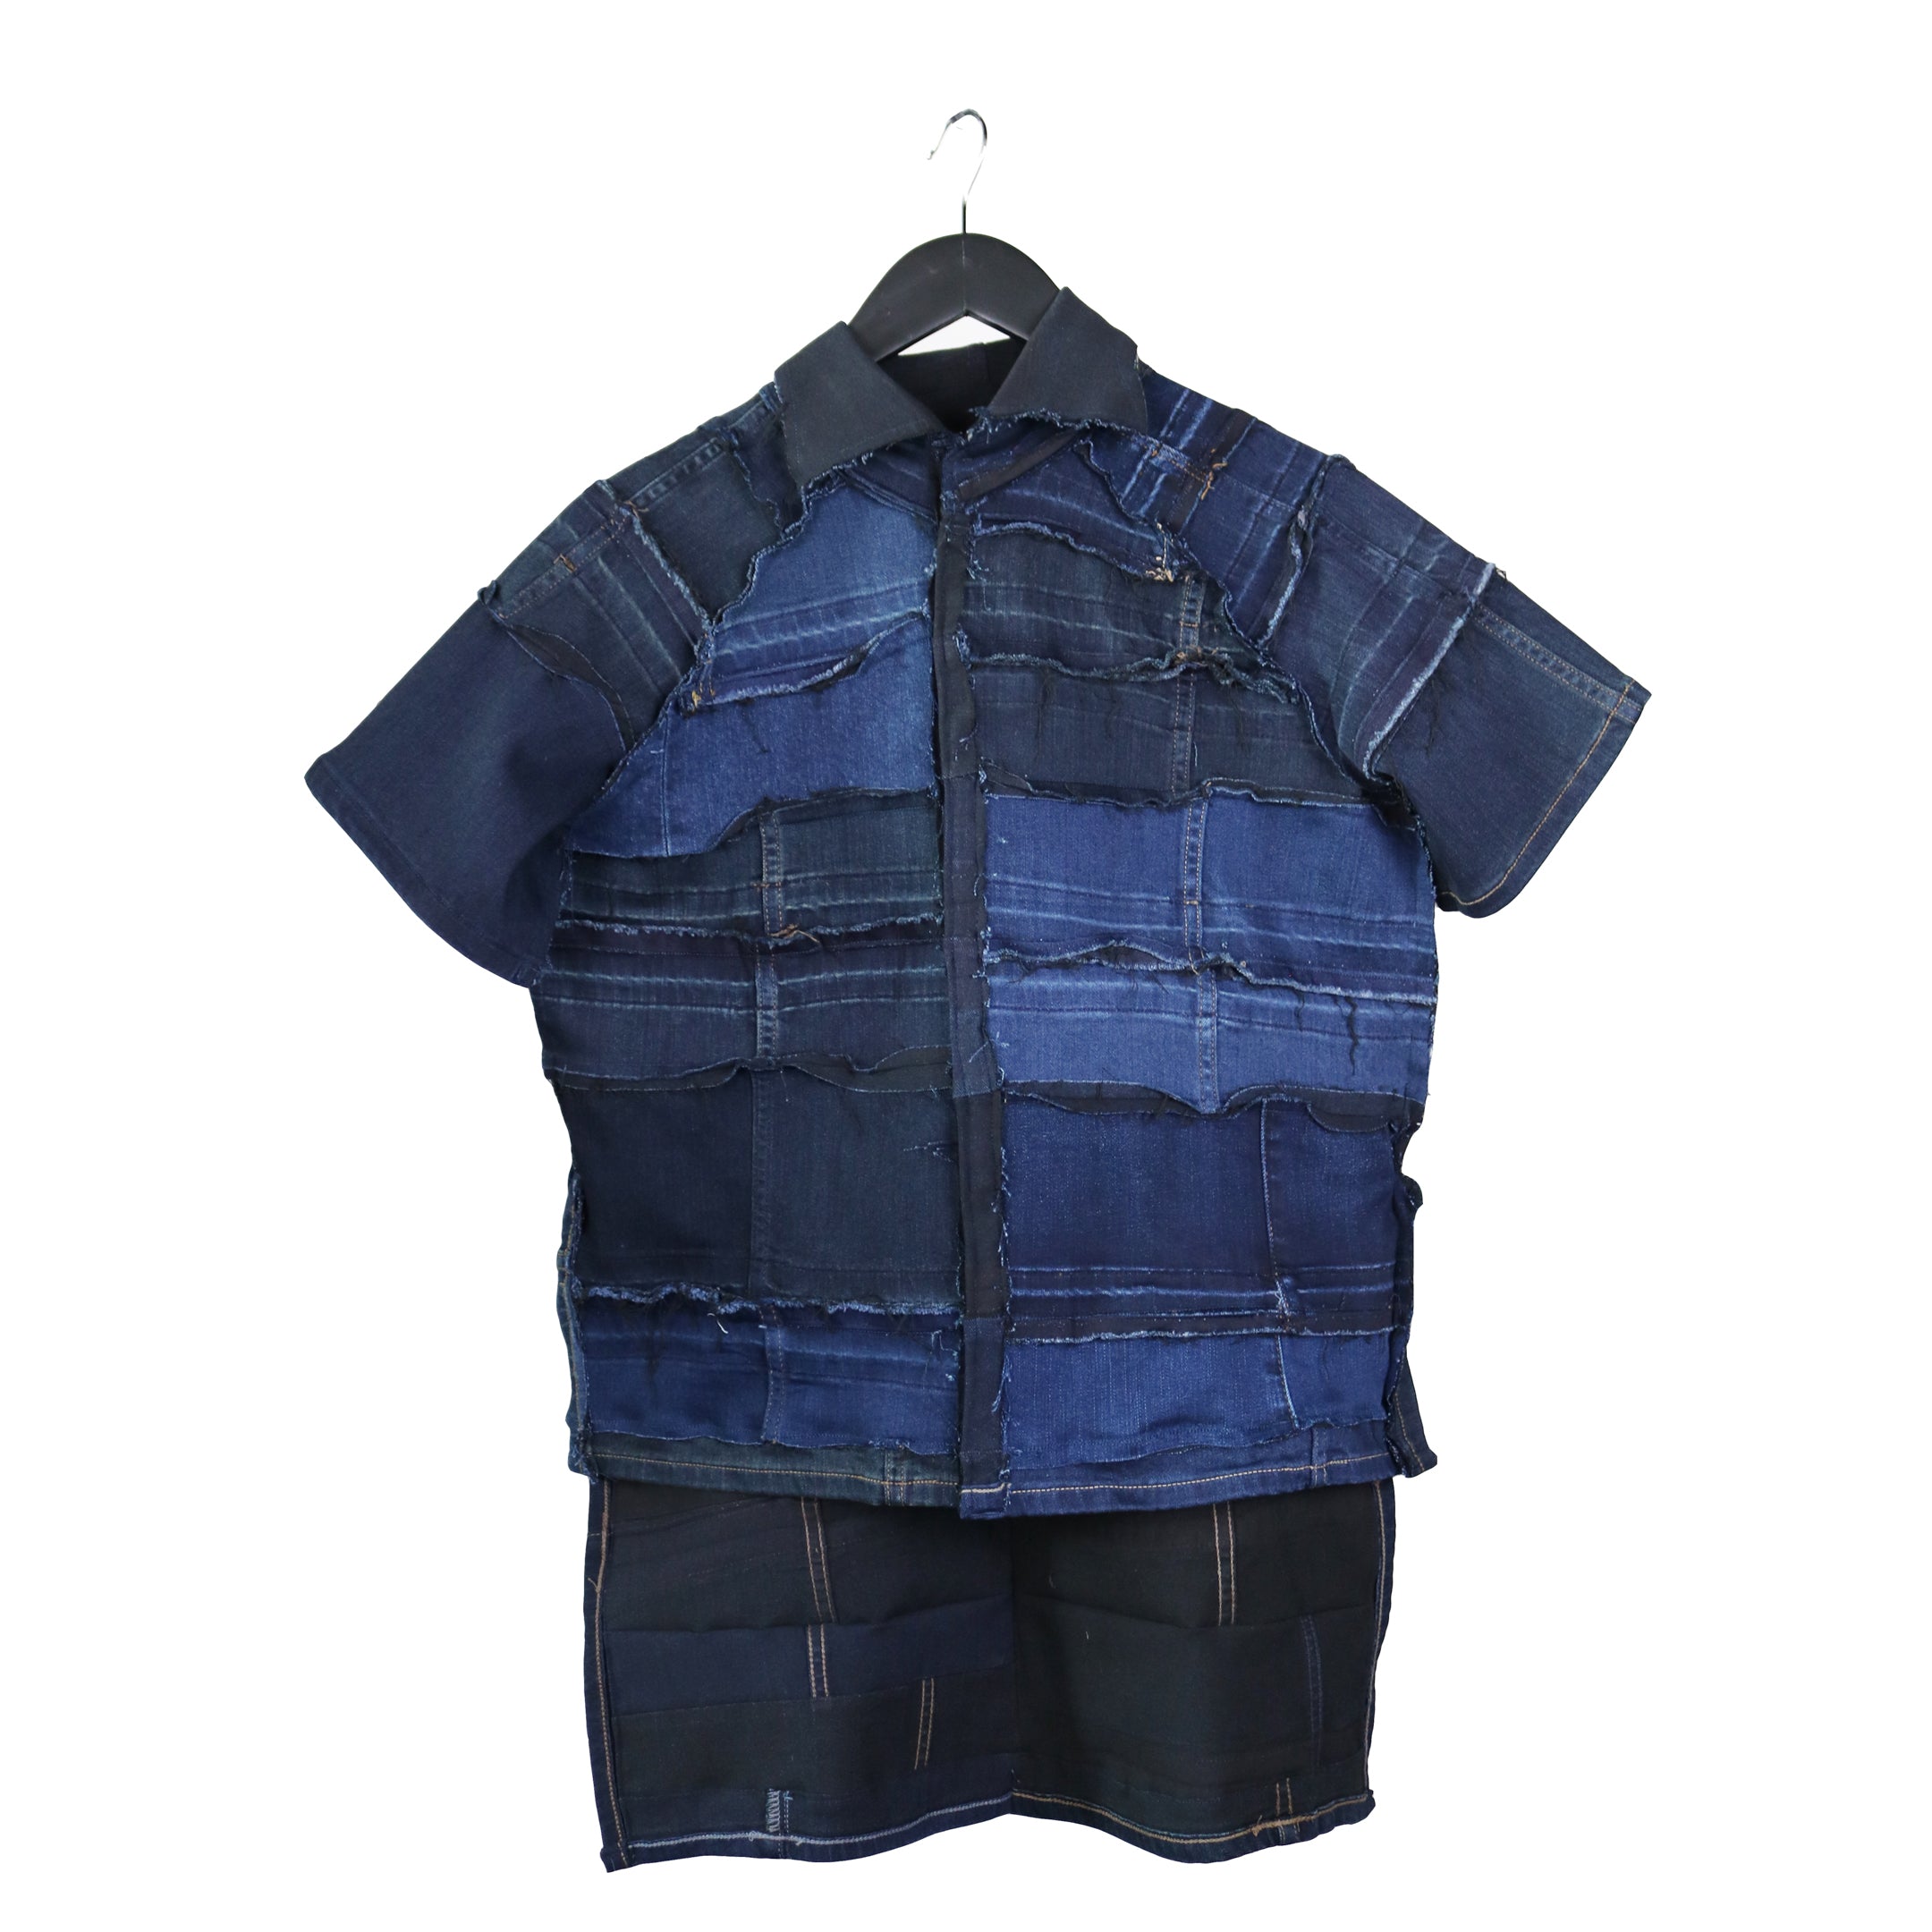 #REMIXbyStevieLeigh stretchy reversible button down shirt